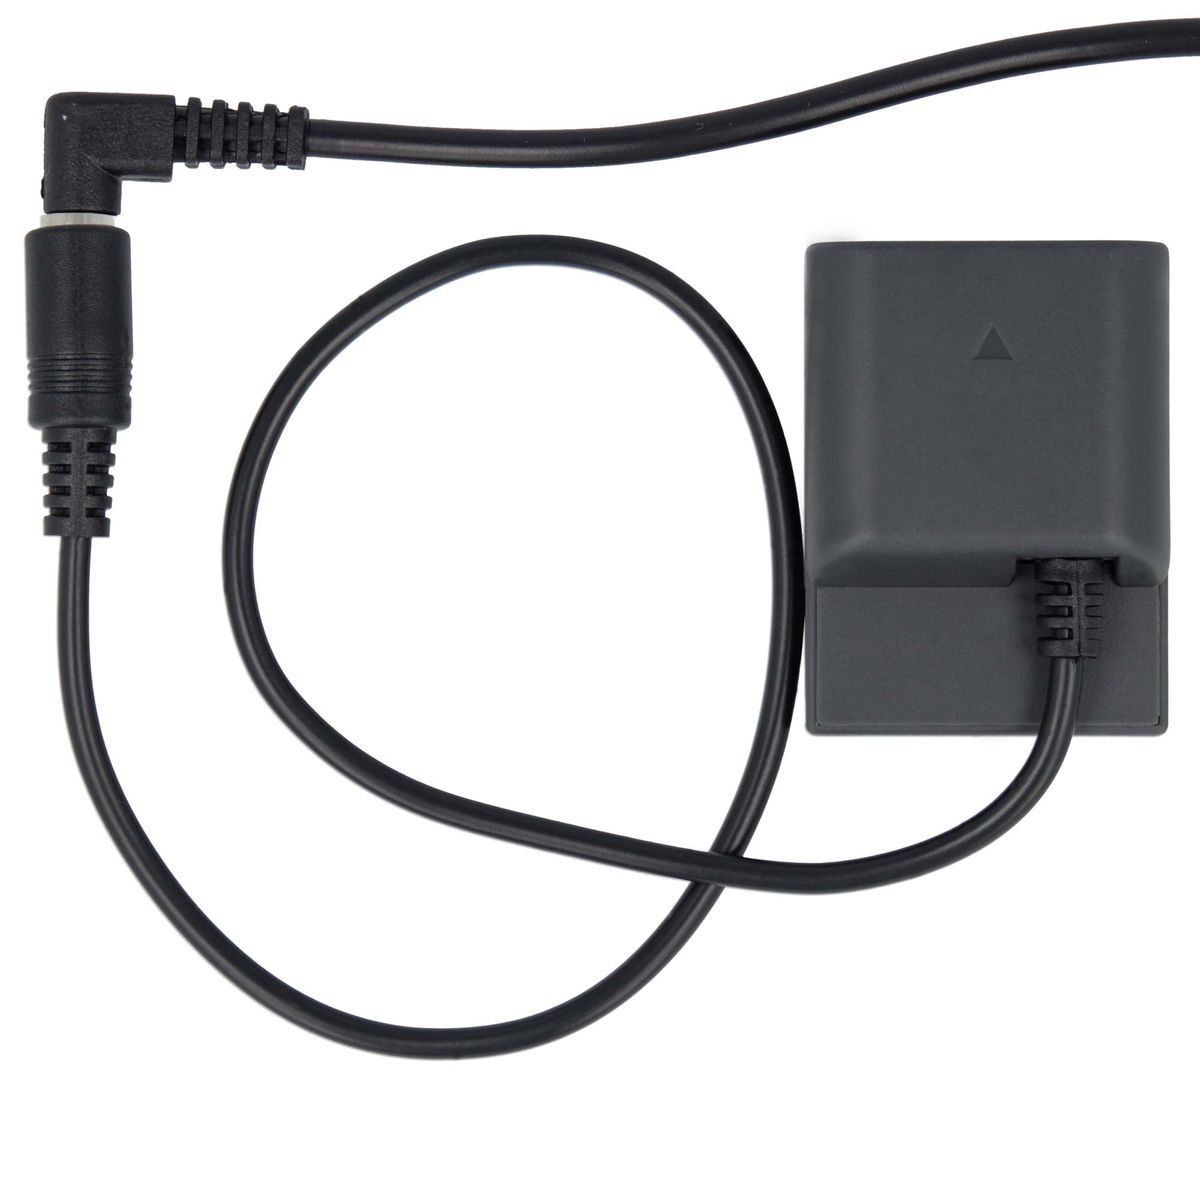 AKKU-KING USB-C Adapter + Kuppler mit kompatibel Angabe Ladegerät keine Canon DR-700 Canon